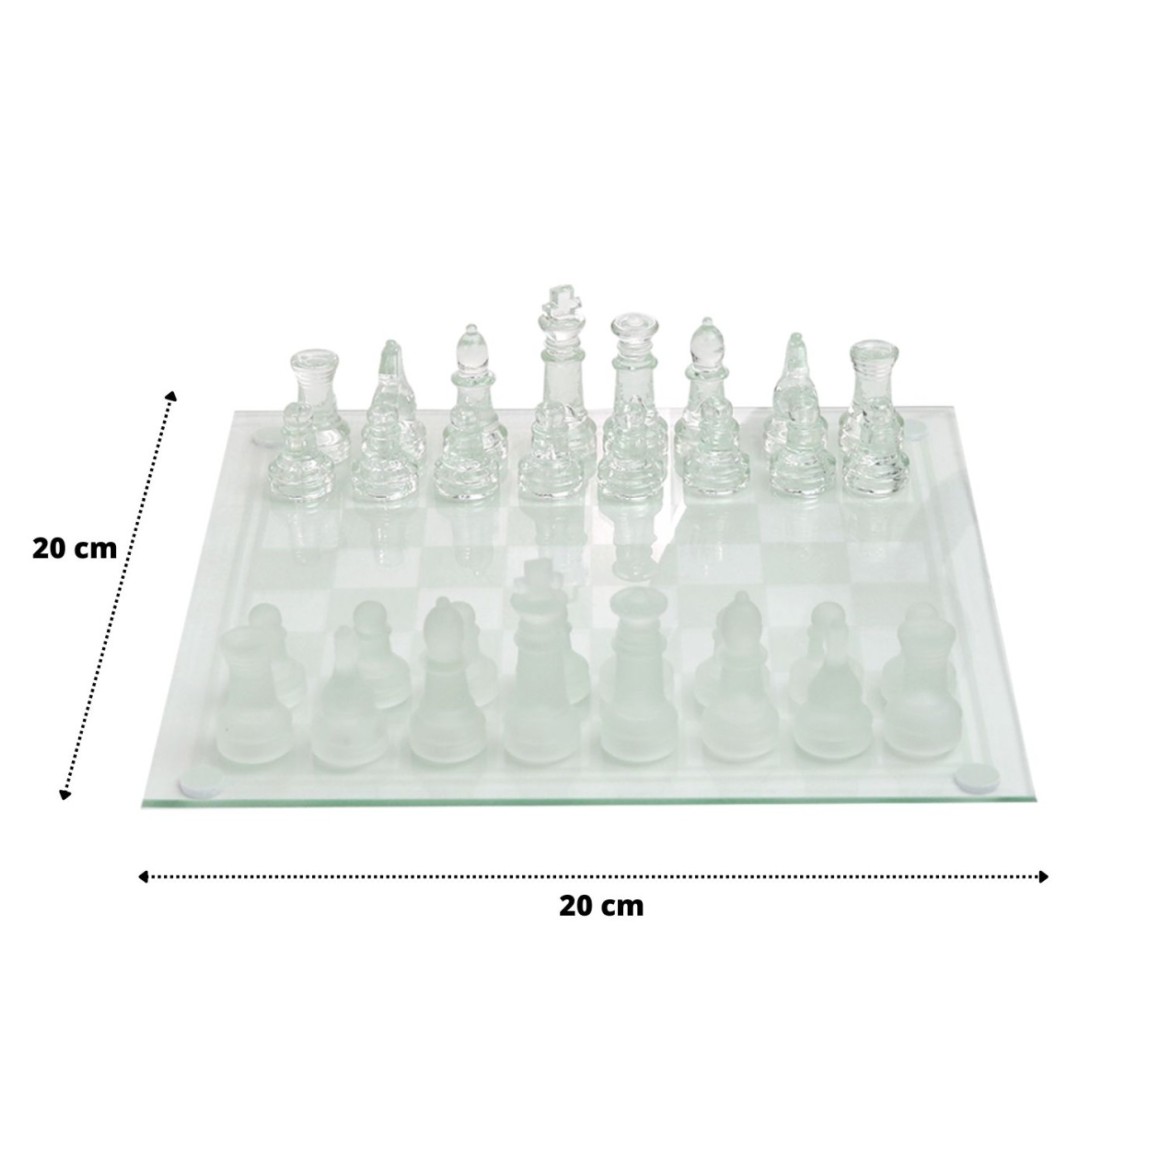 Glass Chess Set - Completo - Tabuleiro de Xadrez com